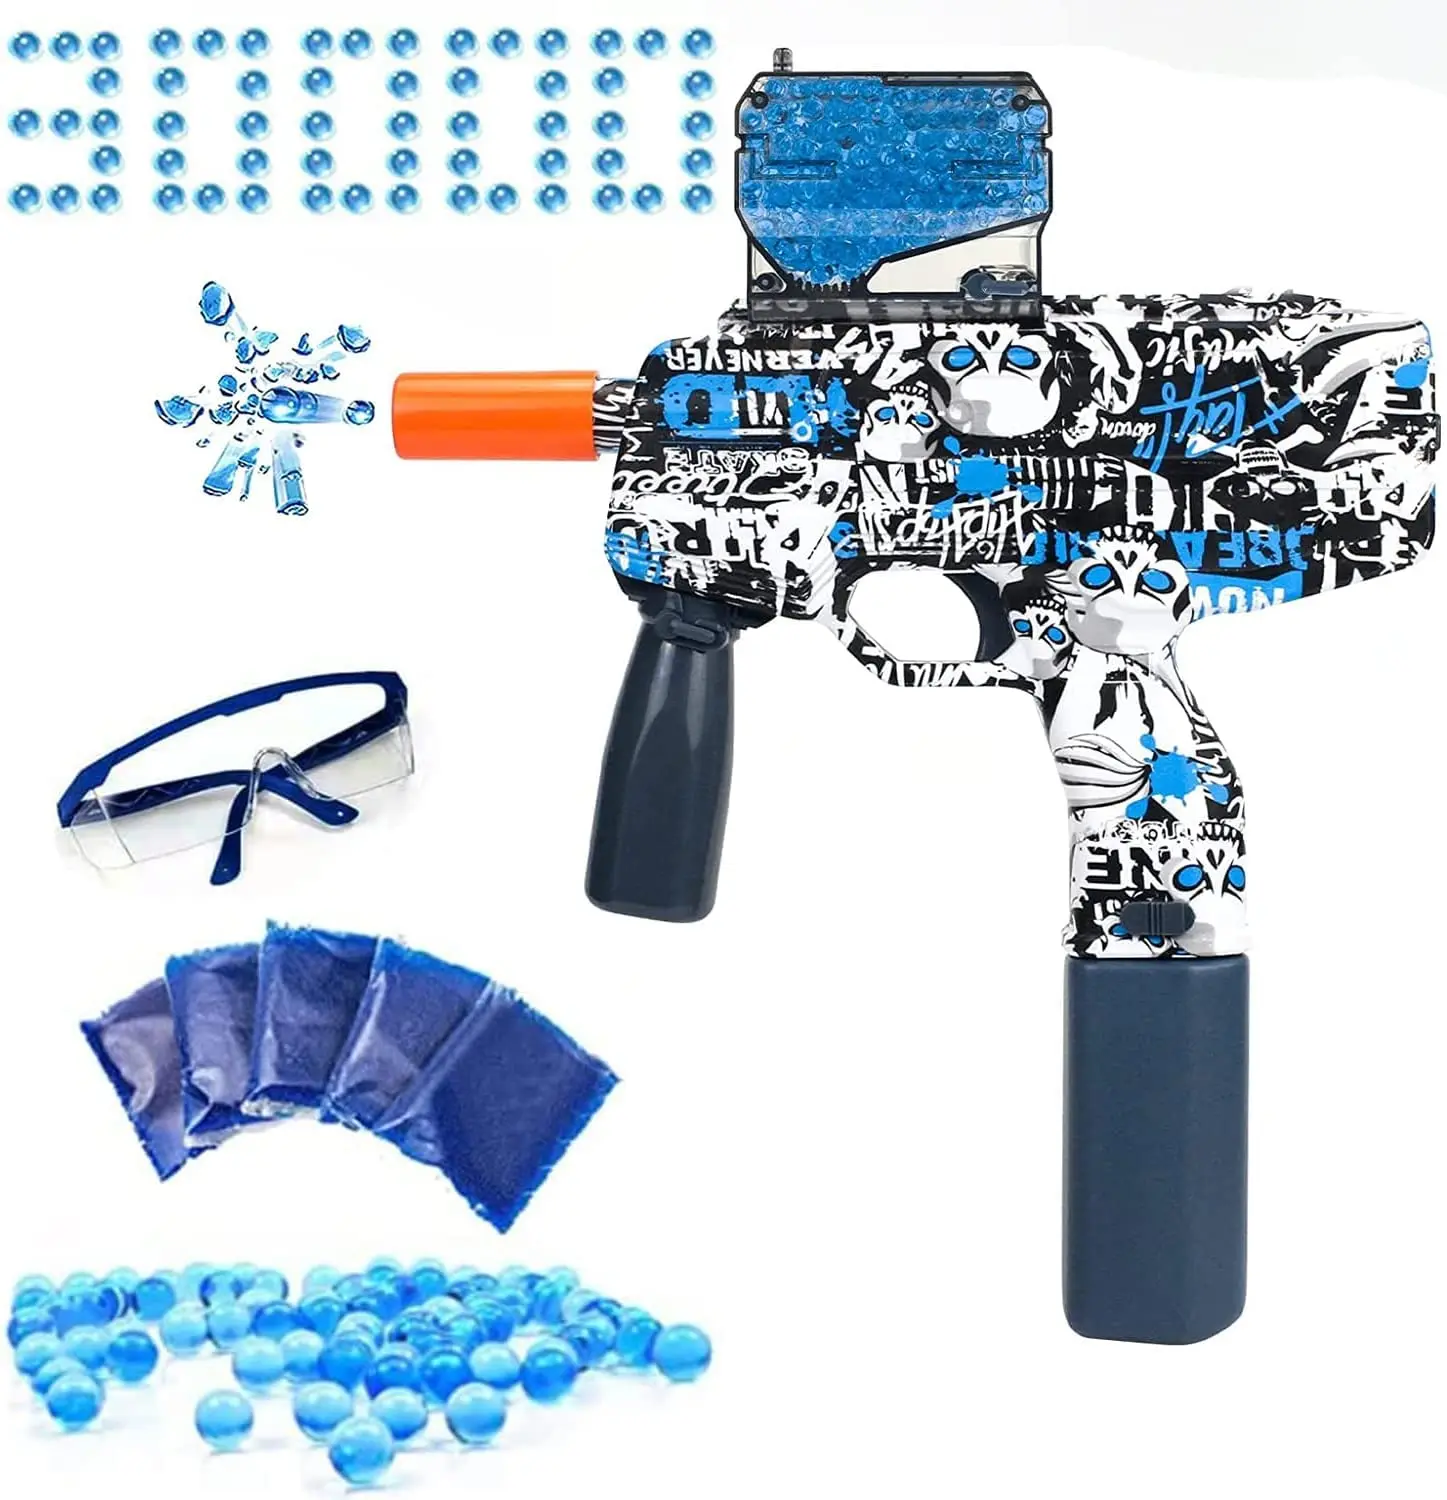 

2022Electric Gel Blaster Gun for Outdoor Games Gel Blaster Toy Gun Shooting Splash Ball Toy Gun With 10000 Gel Balls and Goggles